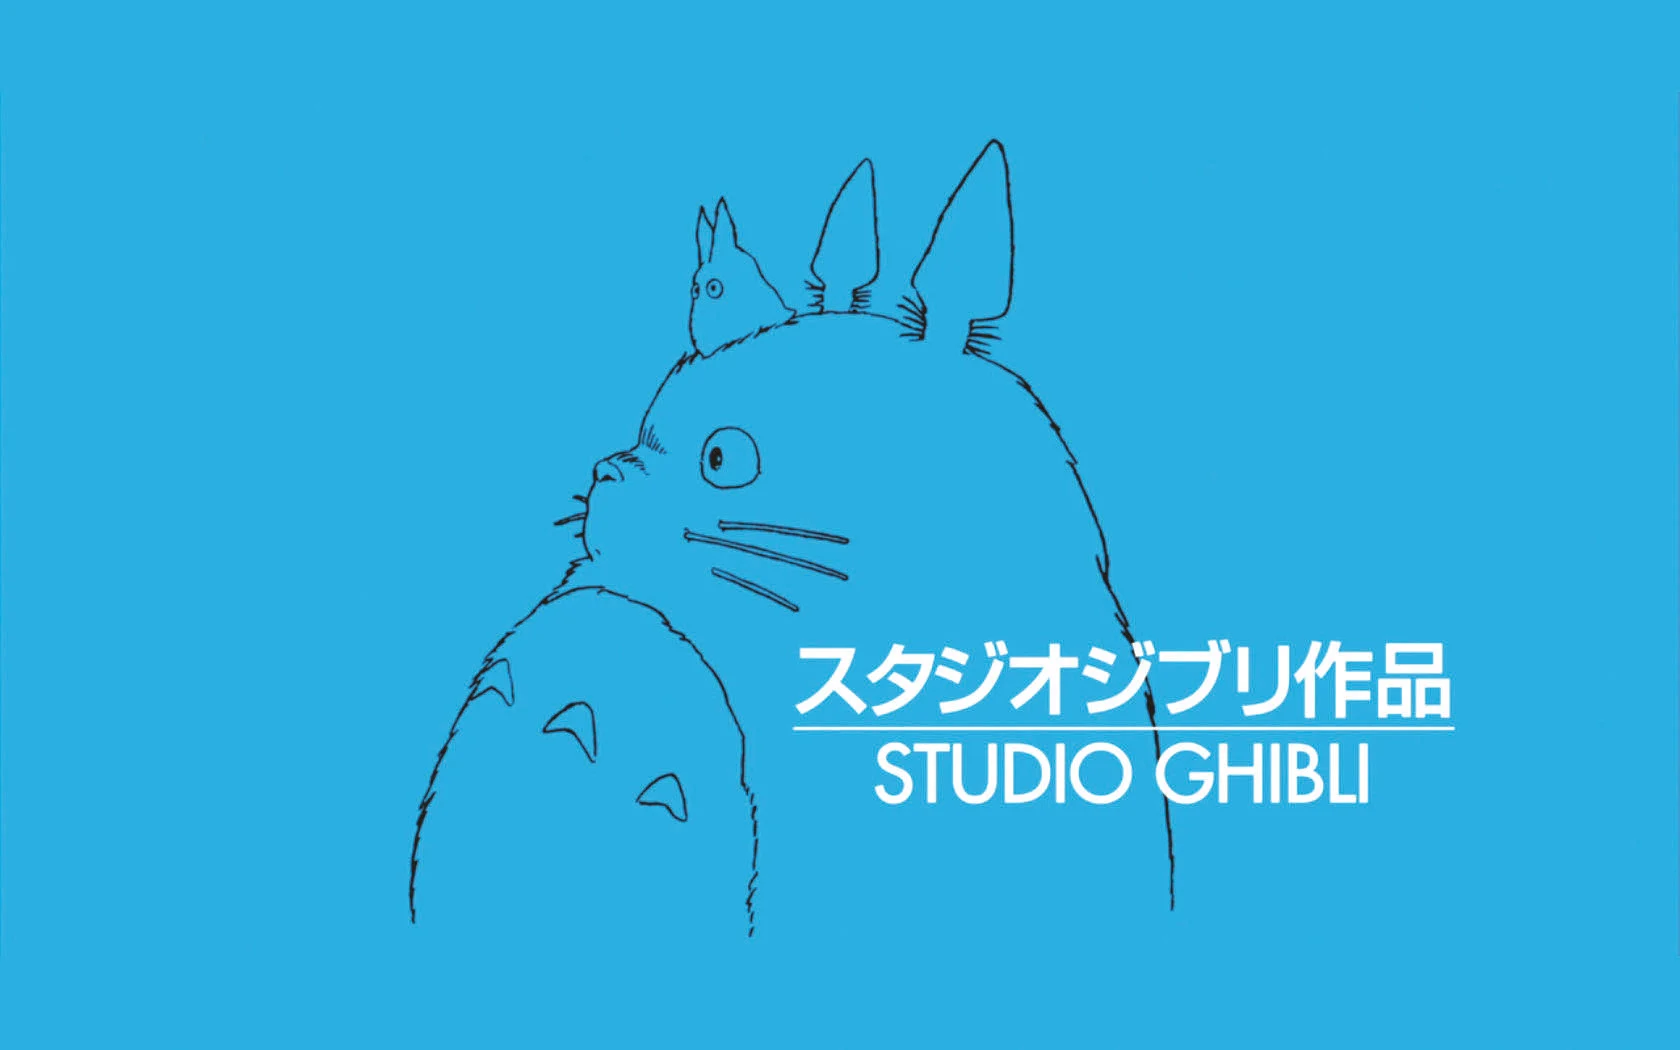 Hurray for anime – Blue Print